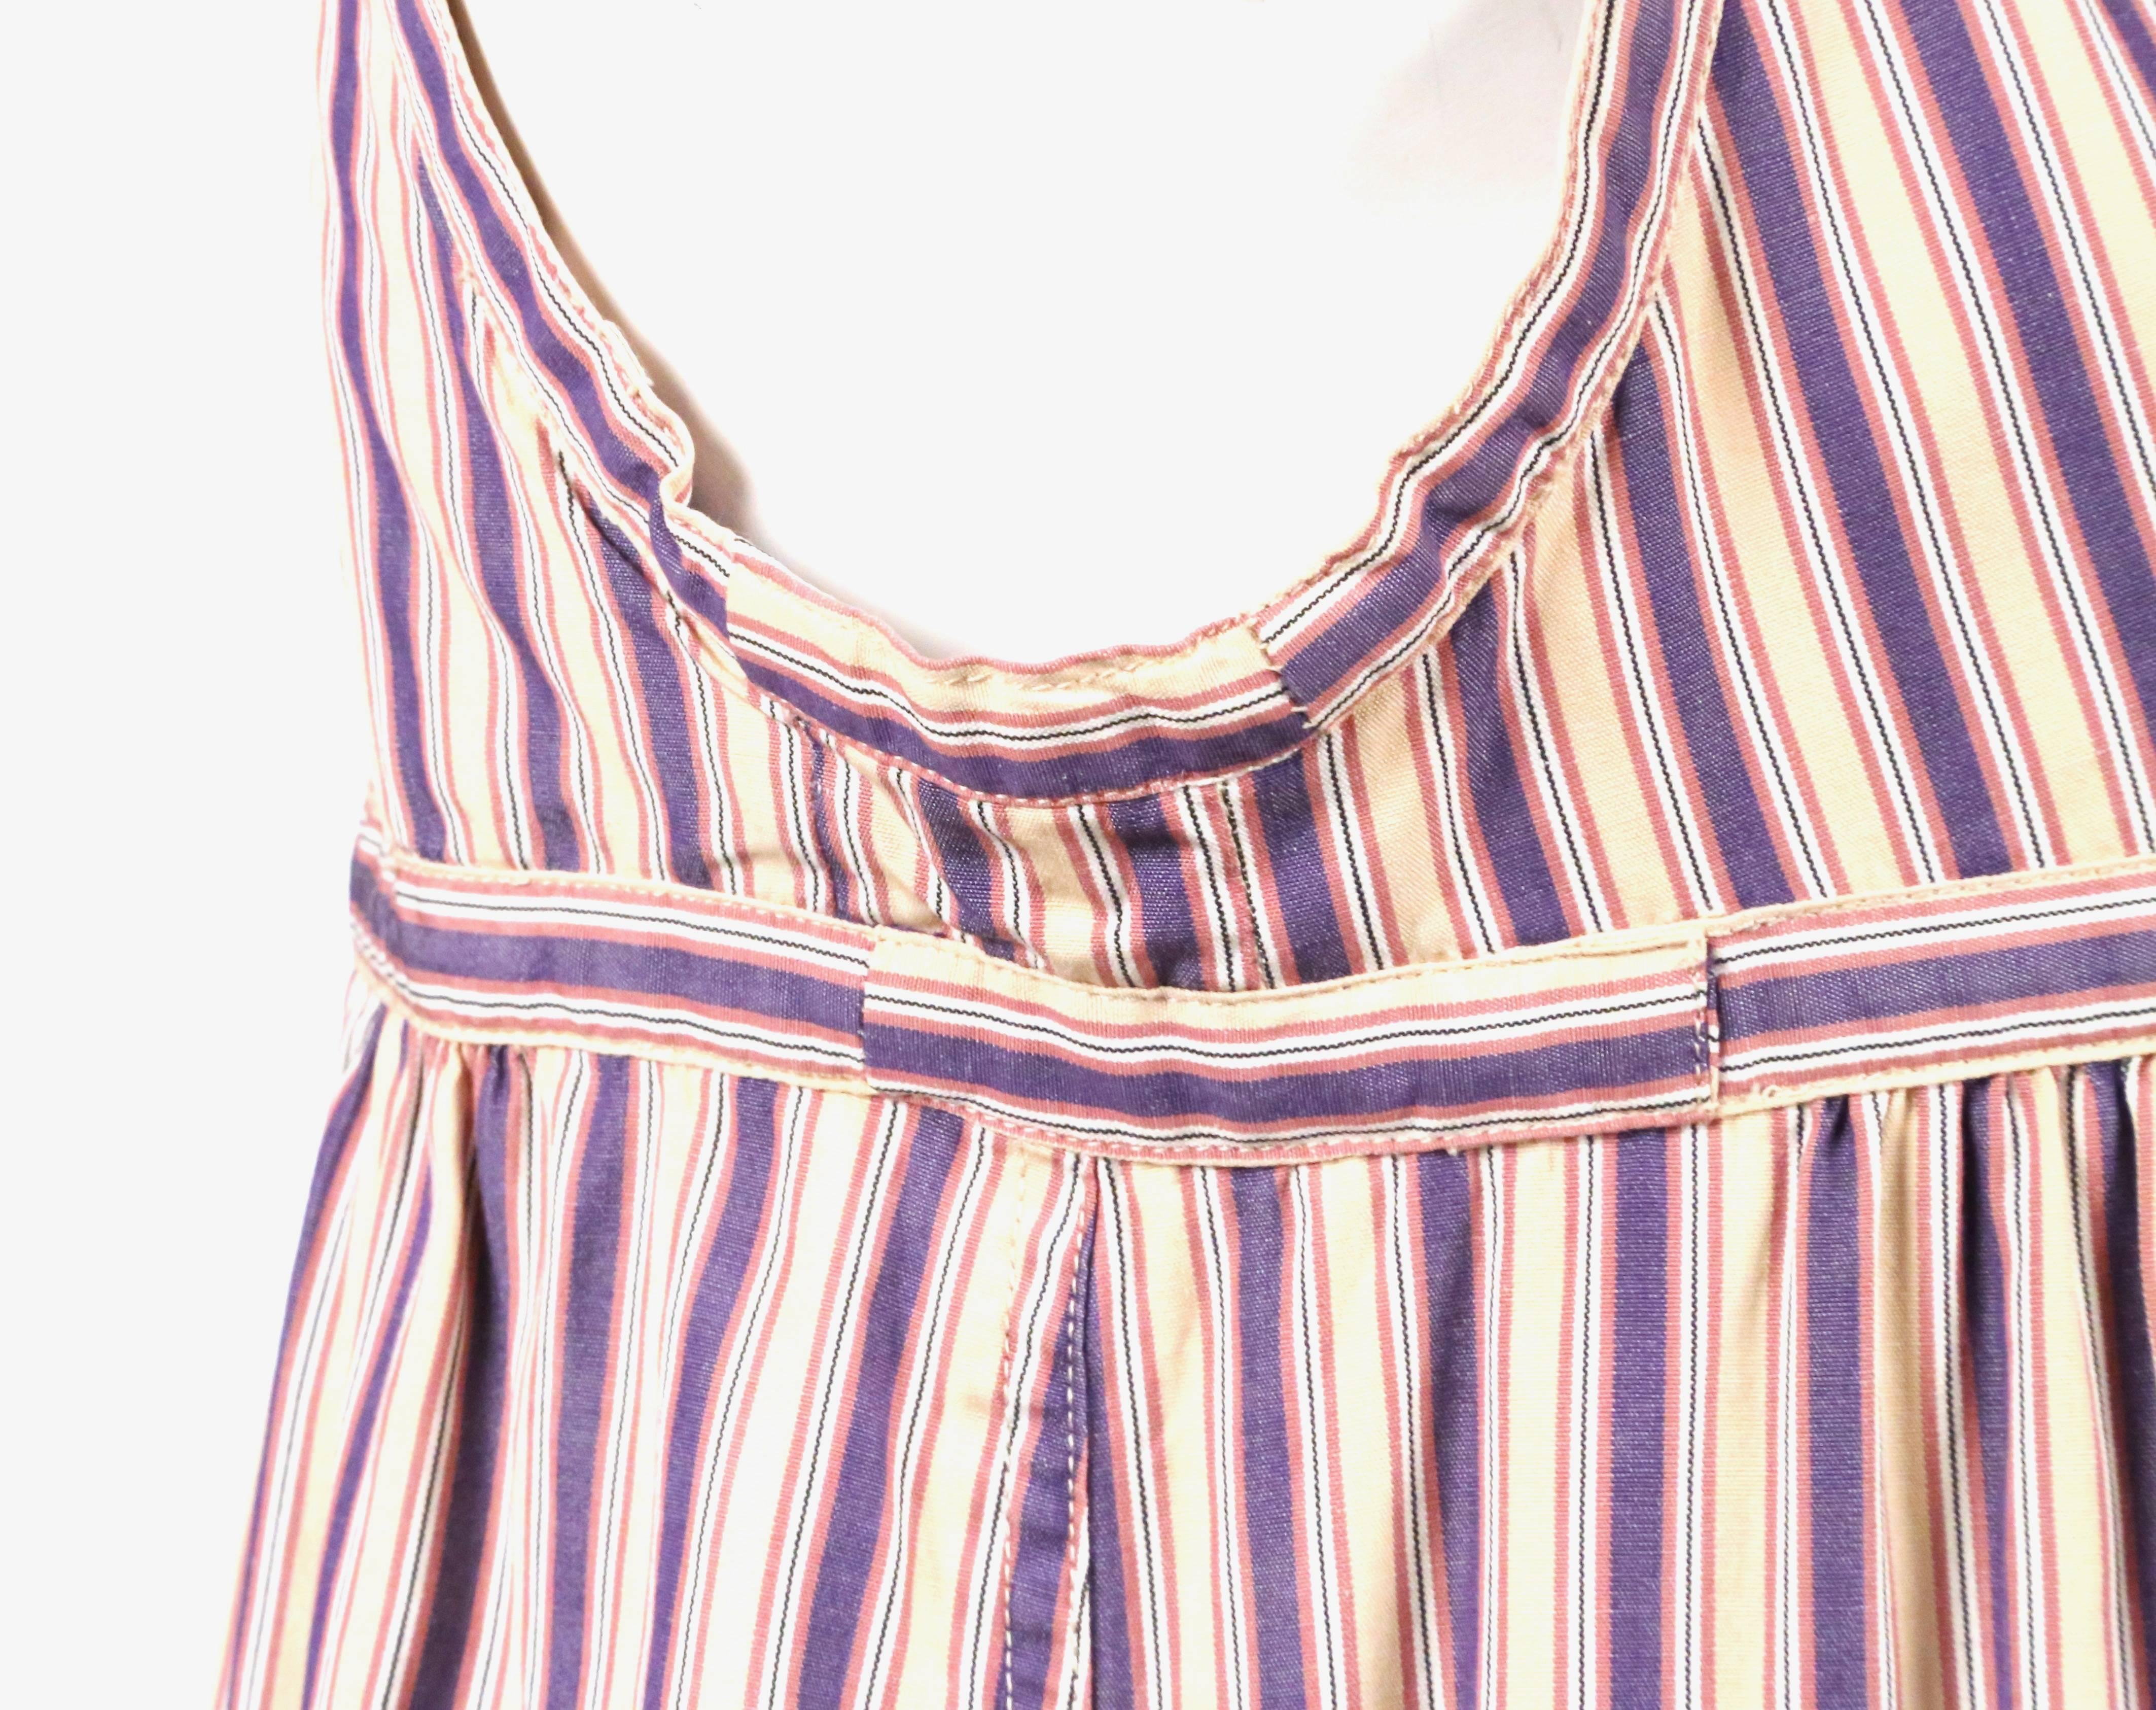 Women's 1970's YVES SAINT LAURENT striped cotton dress with patch pockets